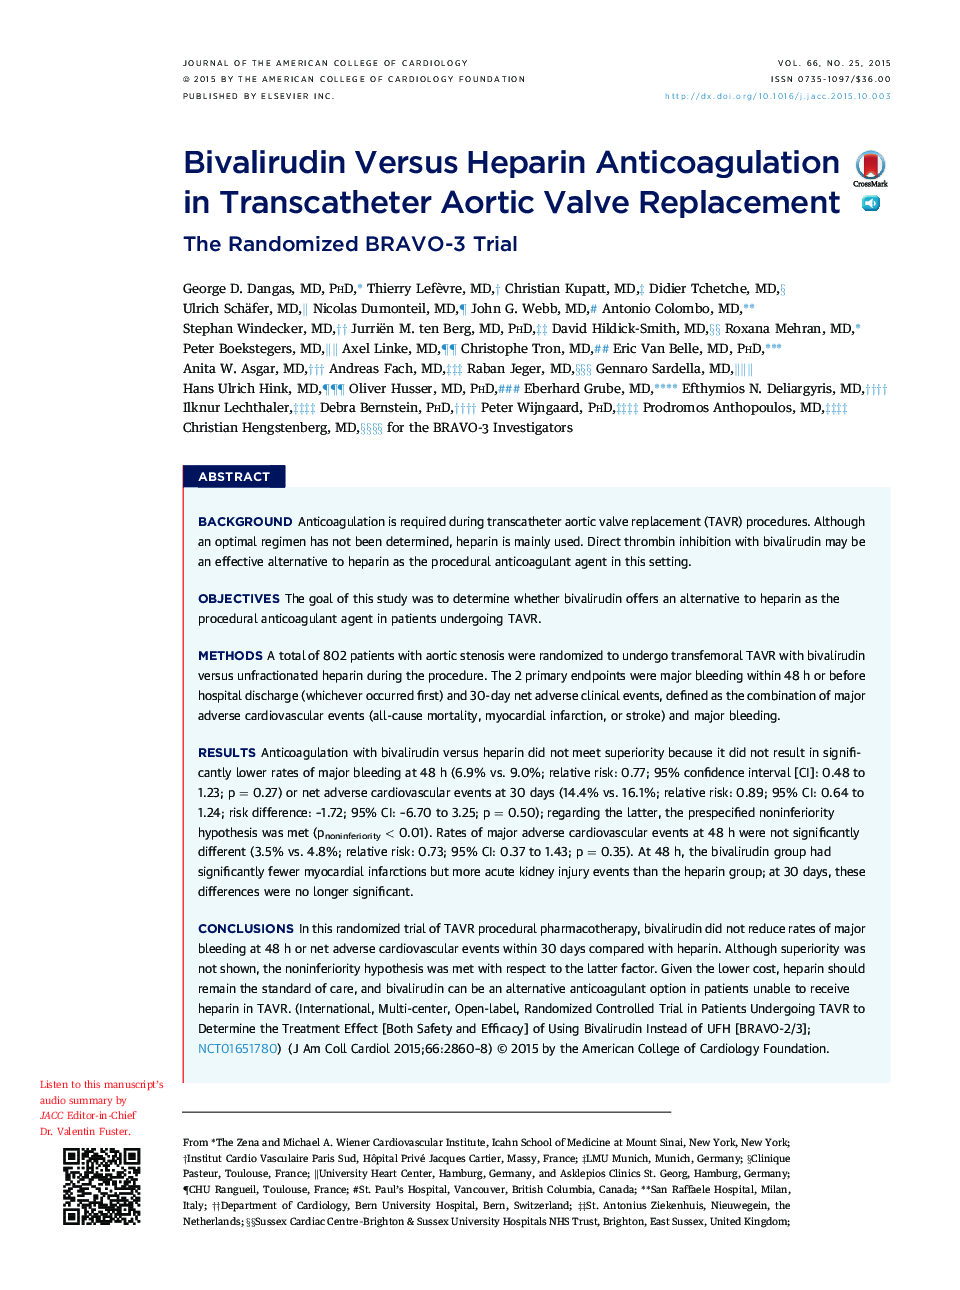 Bivalirudin Versus Heparin Anticoagulation in Transcatheter Aortic Valve Replacement: The Randomized BRAVO-3 Trial